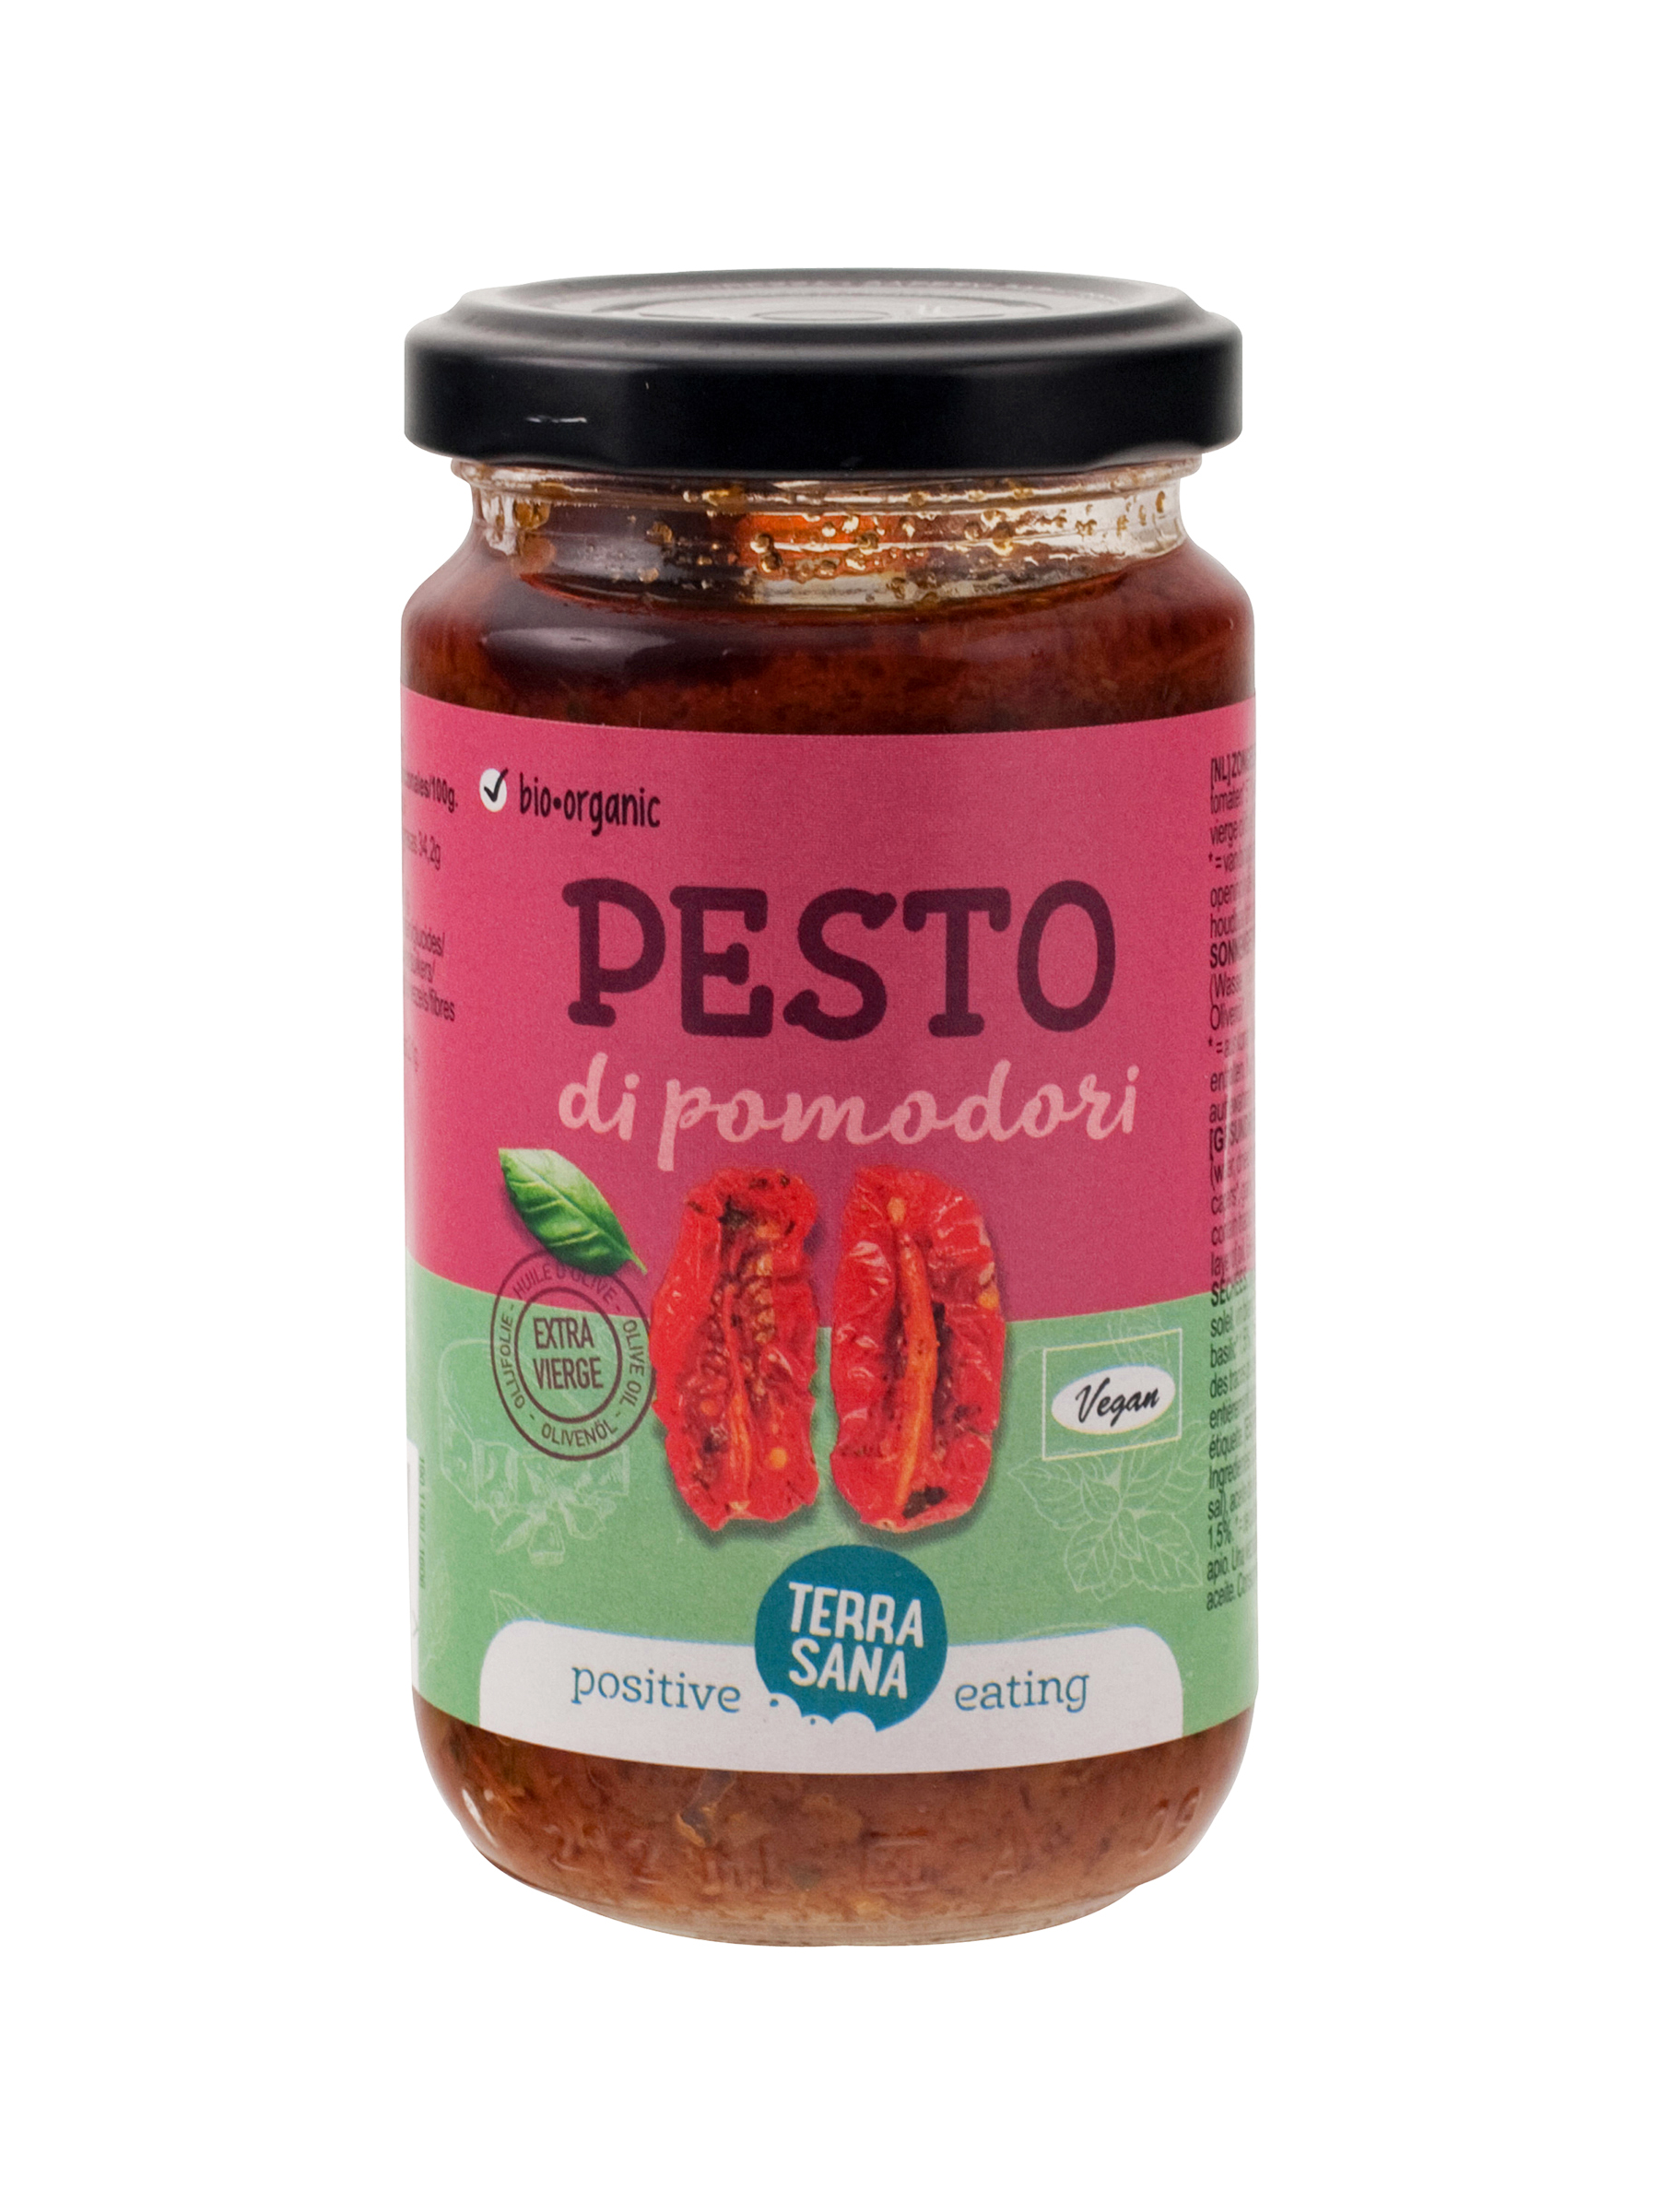 Terrasana Pesto di pomodori(tomaten) bio 180g